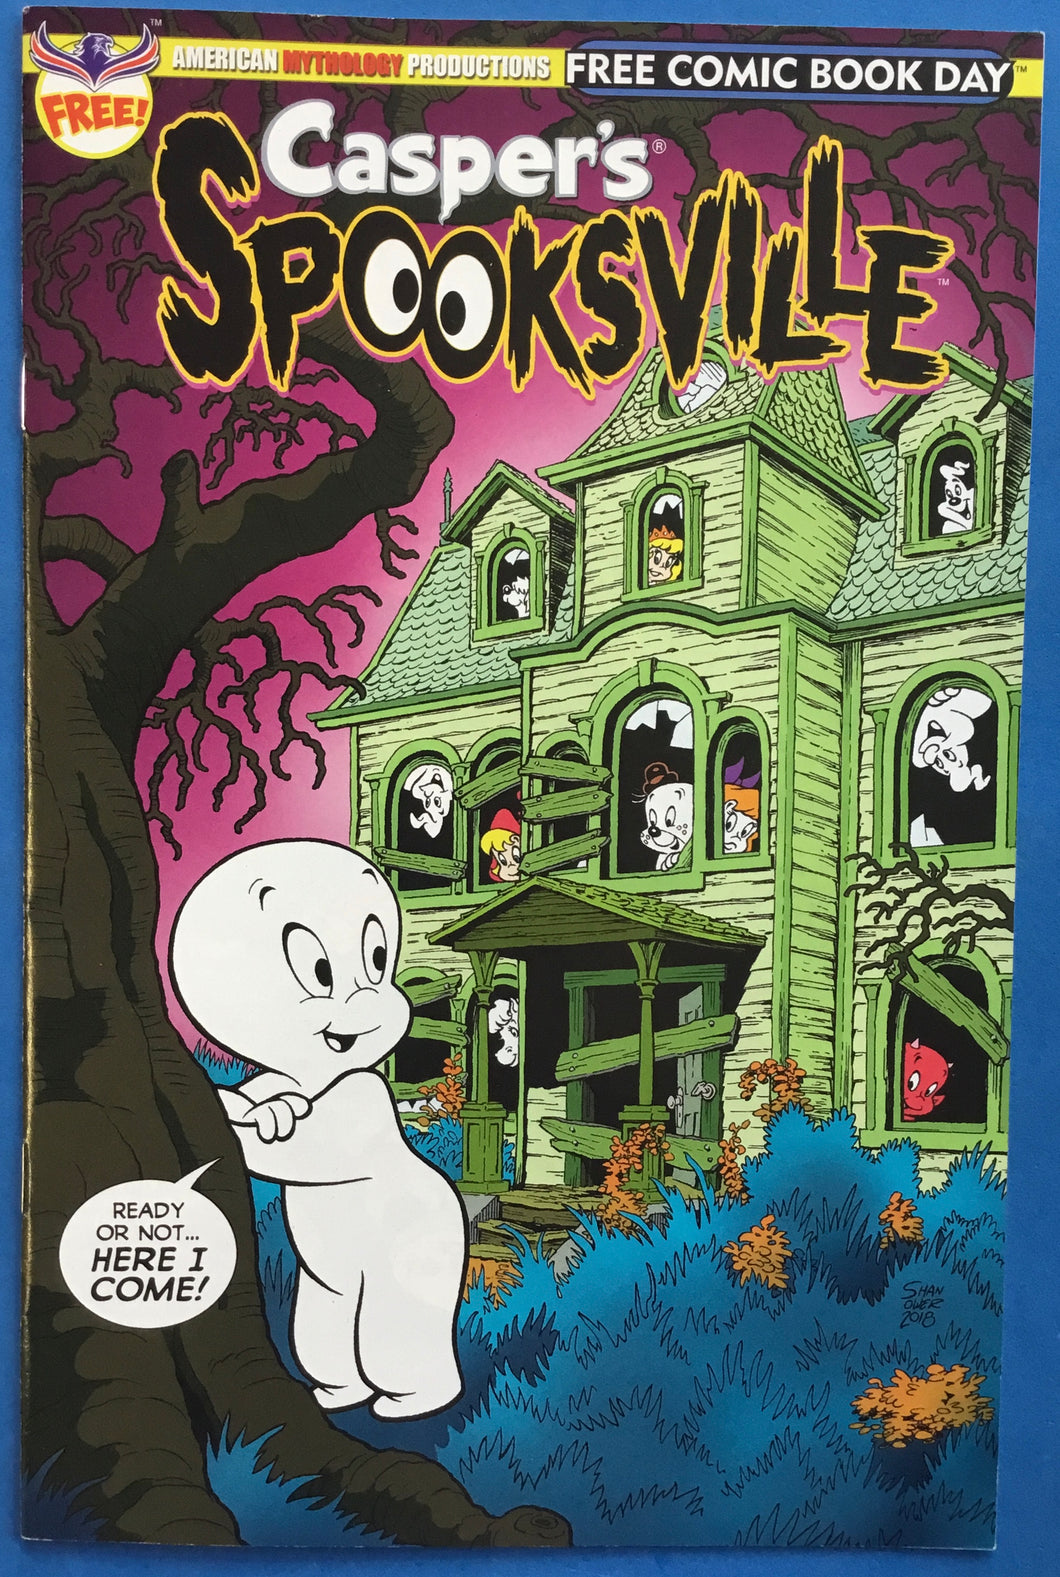 Casper’s Spooksville FCBD 2019 AMP Comics